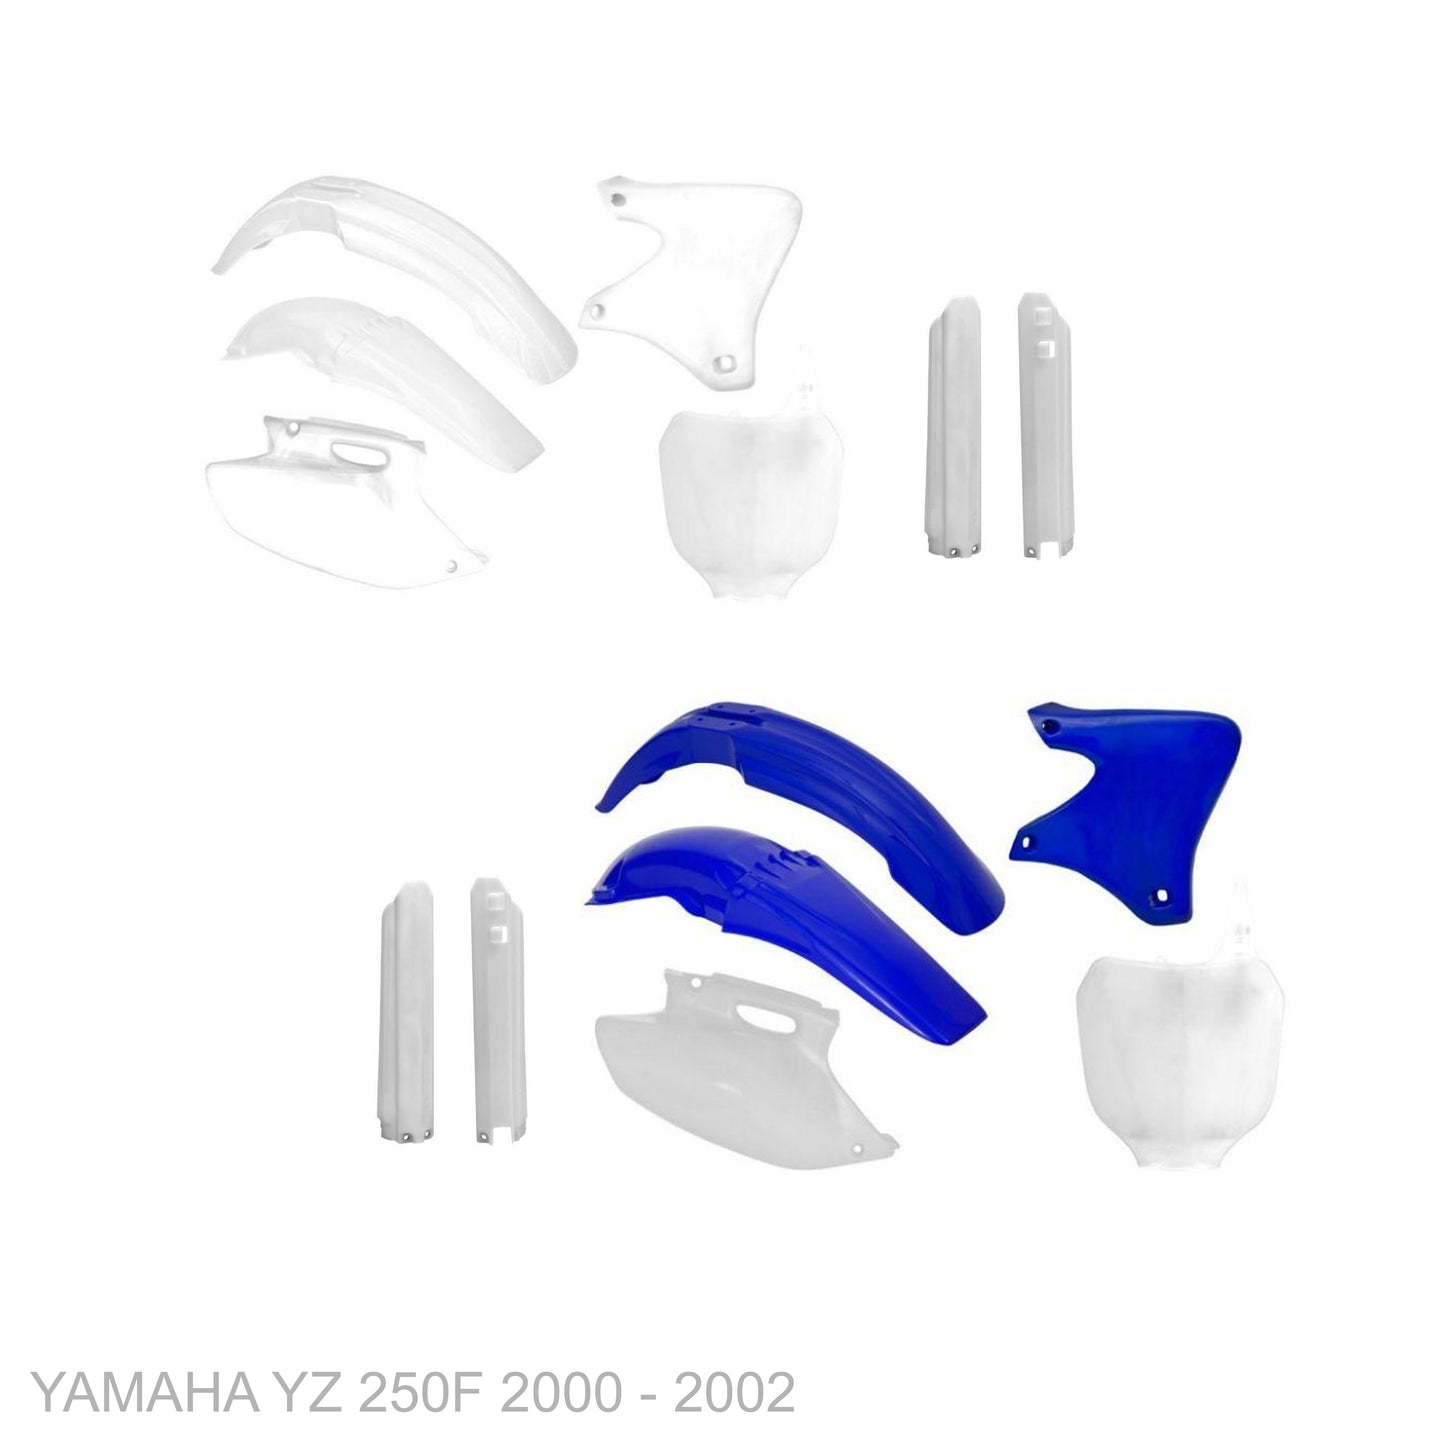 YAMAHA YZ 250F 2000 - 2002 Start From Scratch Graphics Kits